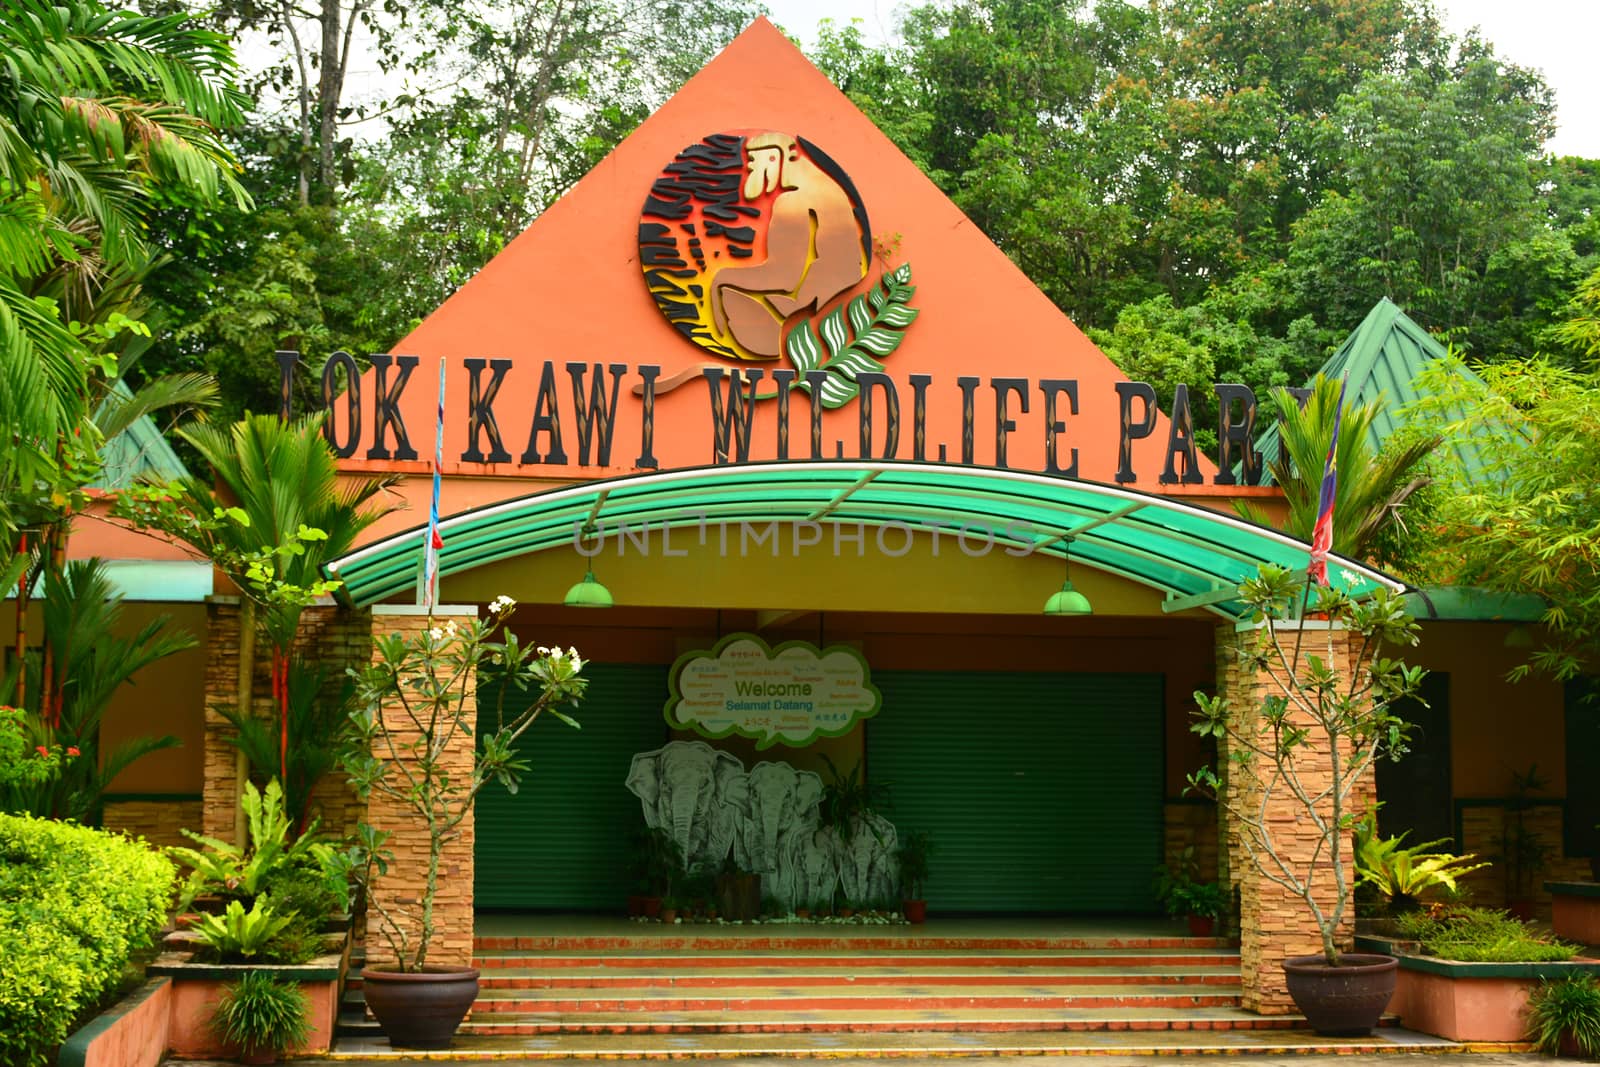 Lok Kawi Wildlife Park Facade in Sabah, Malaysia by imwaltersy